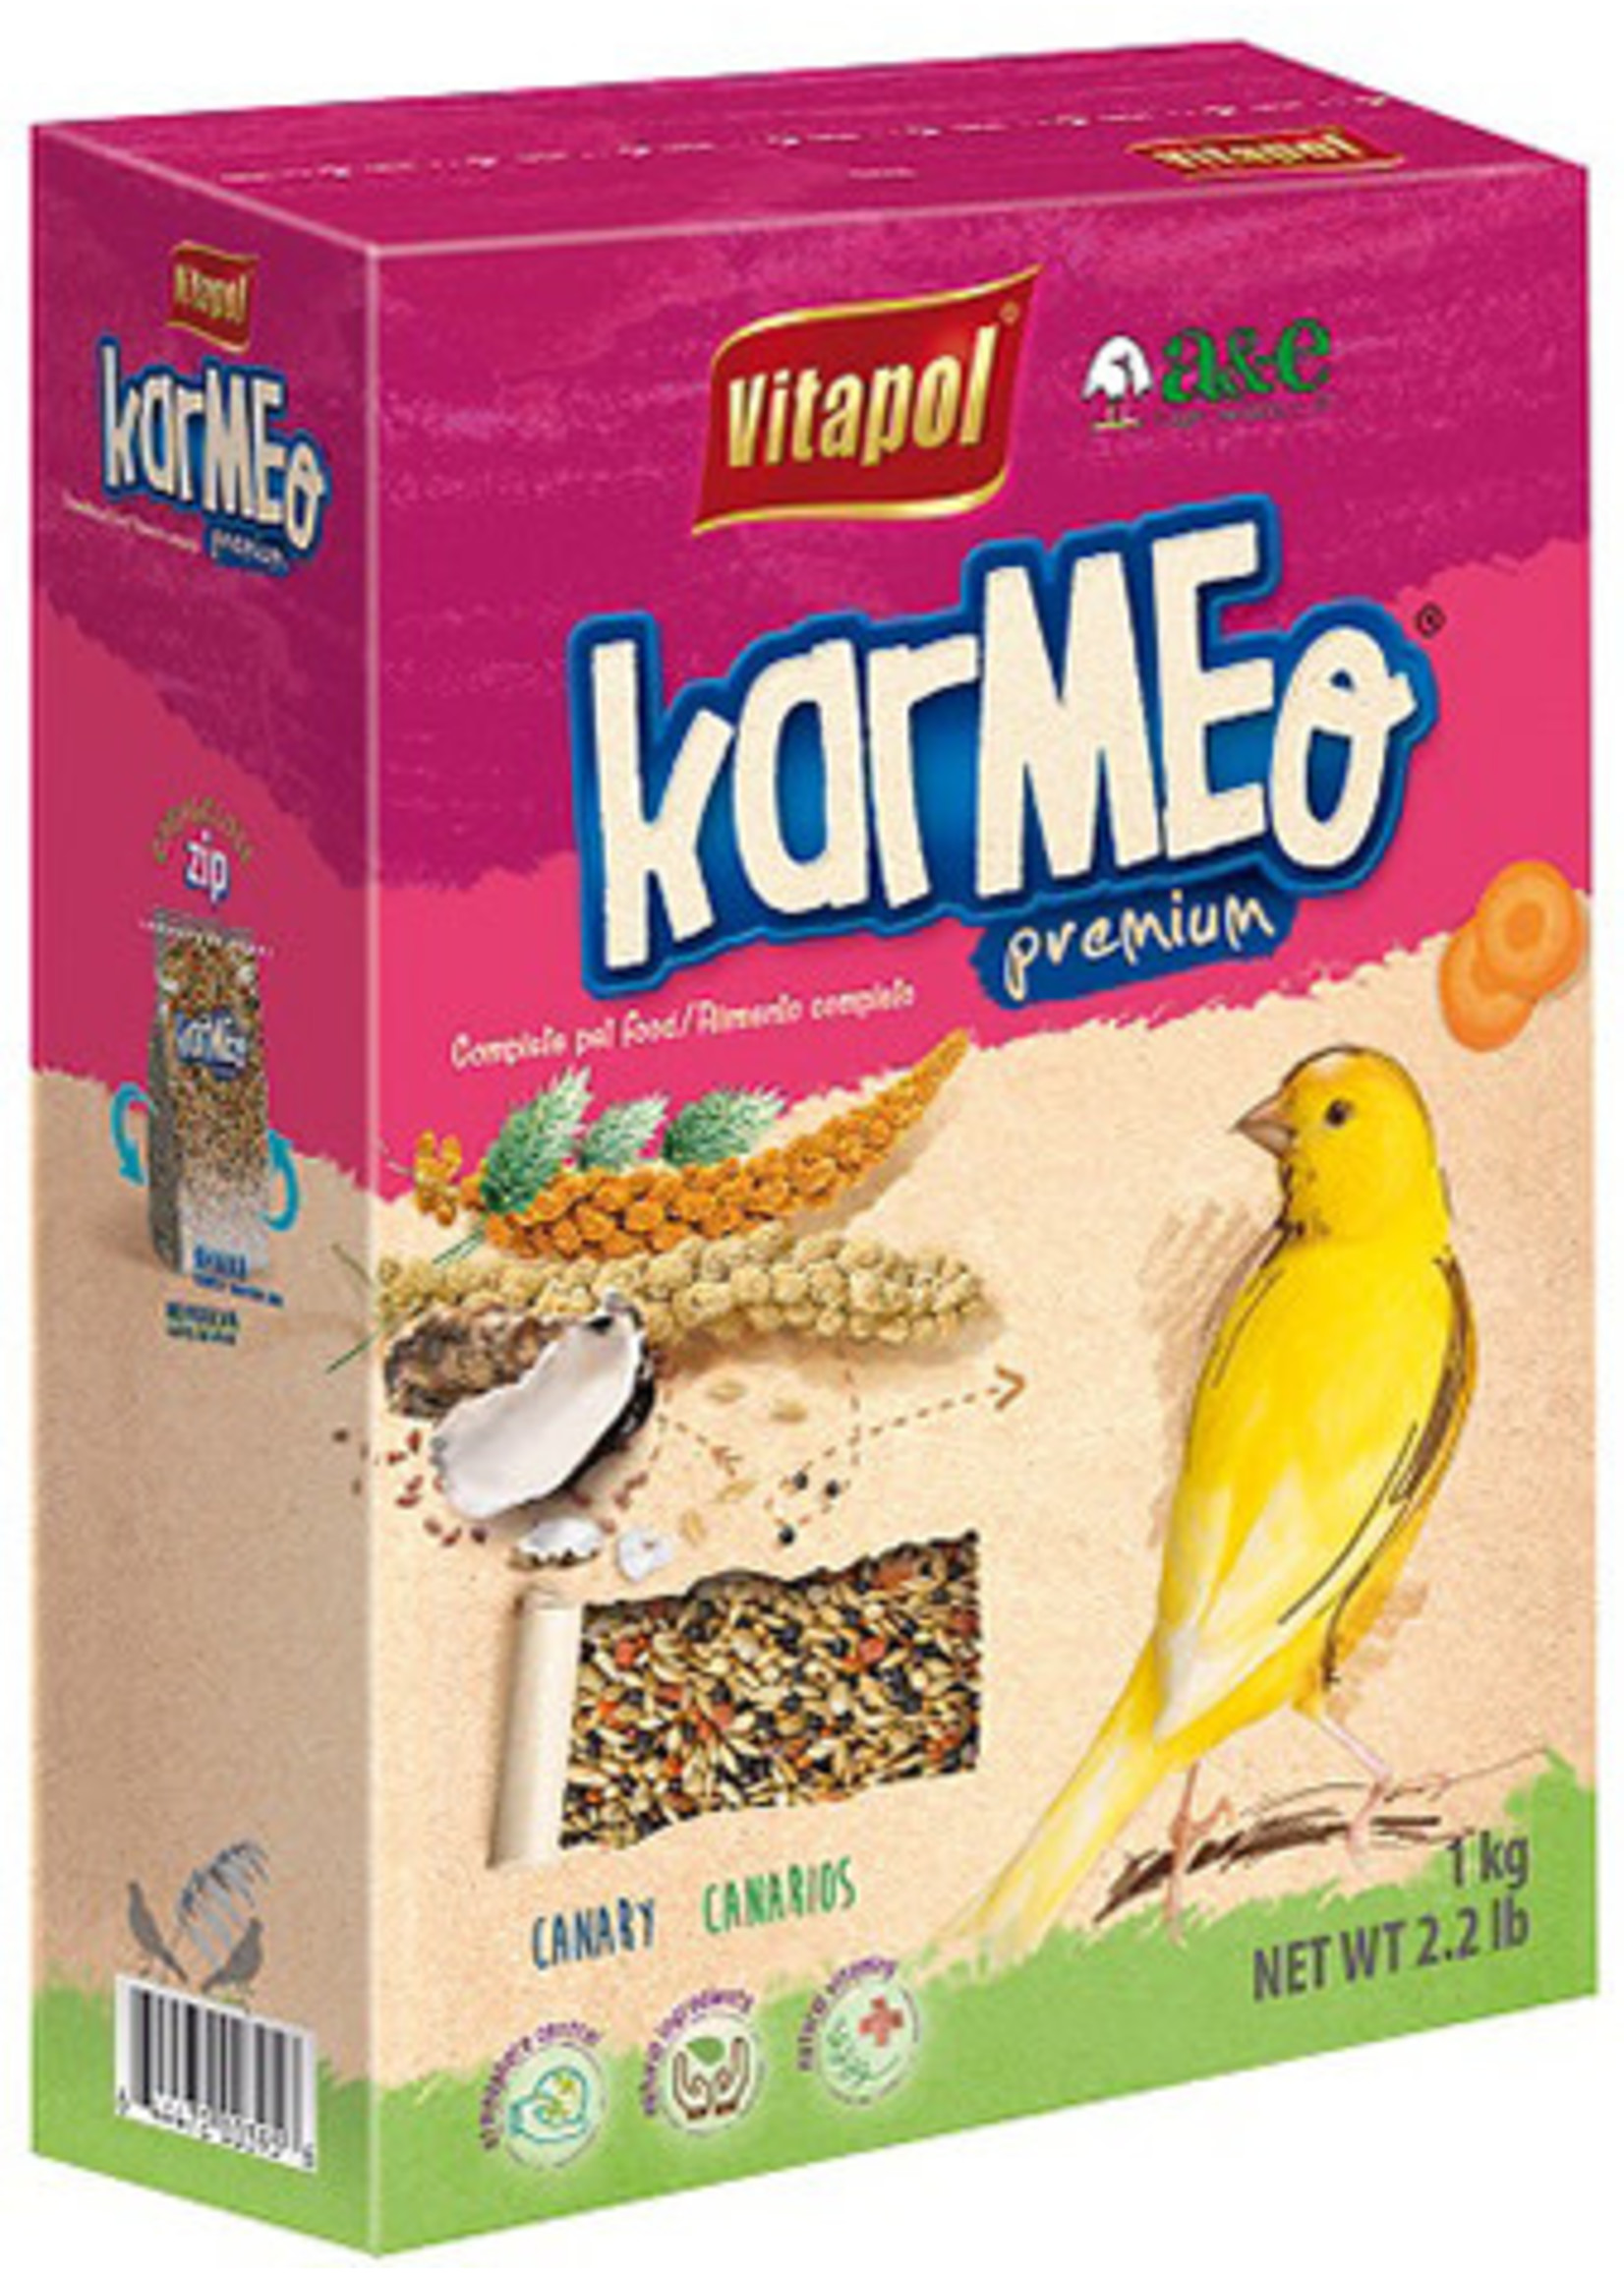 A&E Vitapol Karmeo Premium Canary (1kg)